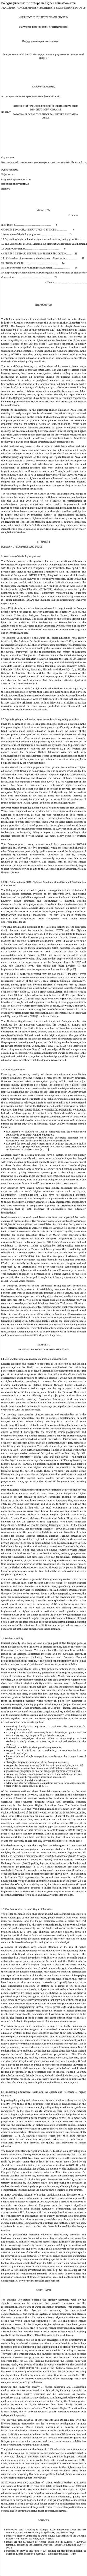 Bologna process: the european higher education area